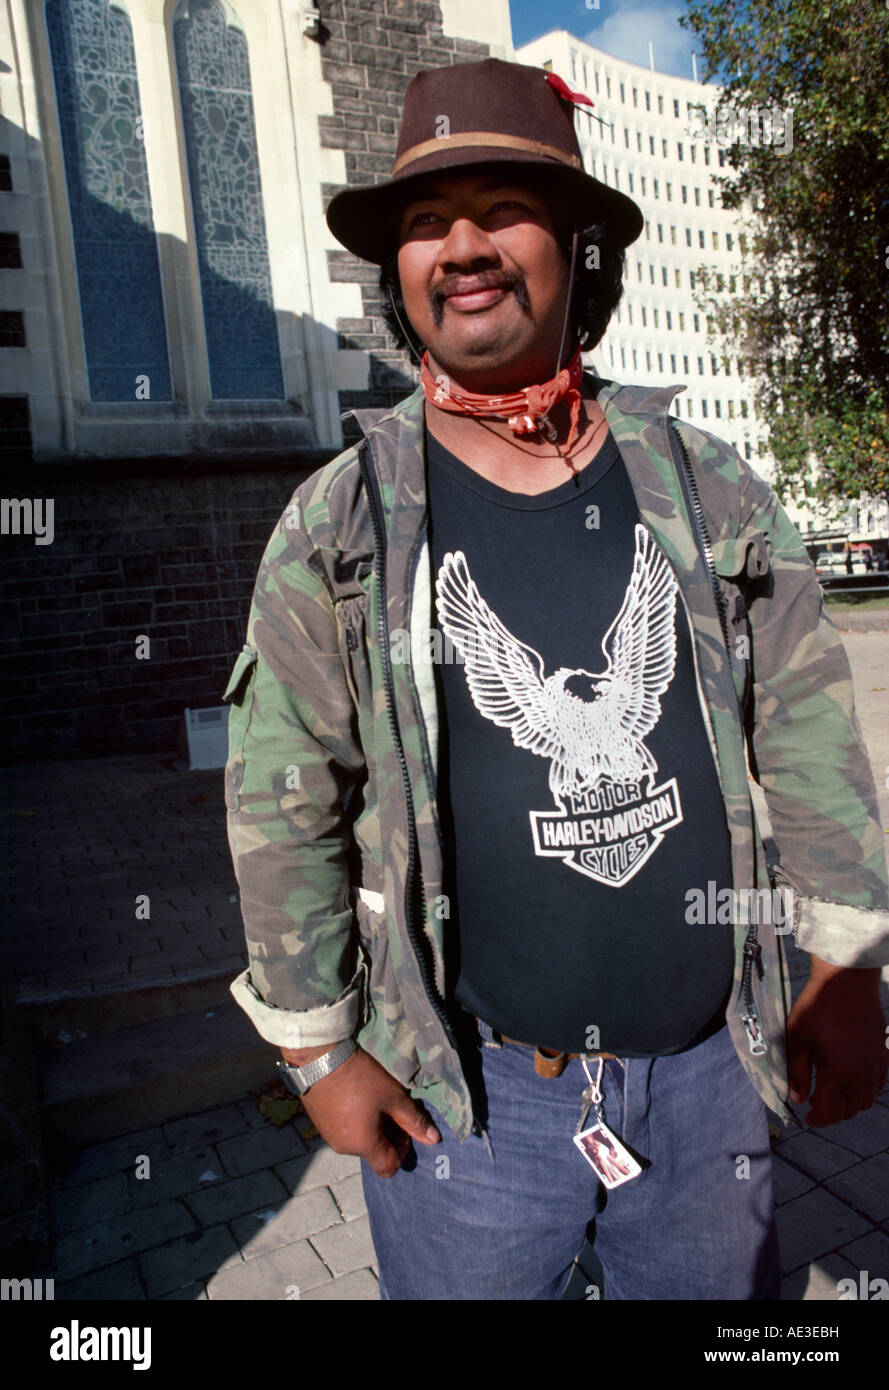 New Zealand Maori Man Wearing Harley Davidson Tee Shirt Stock Photo Alamy